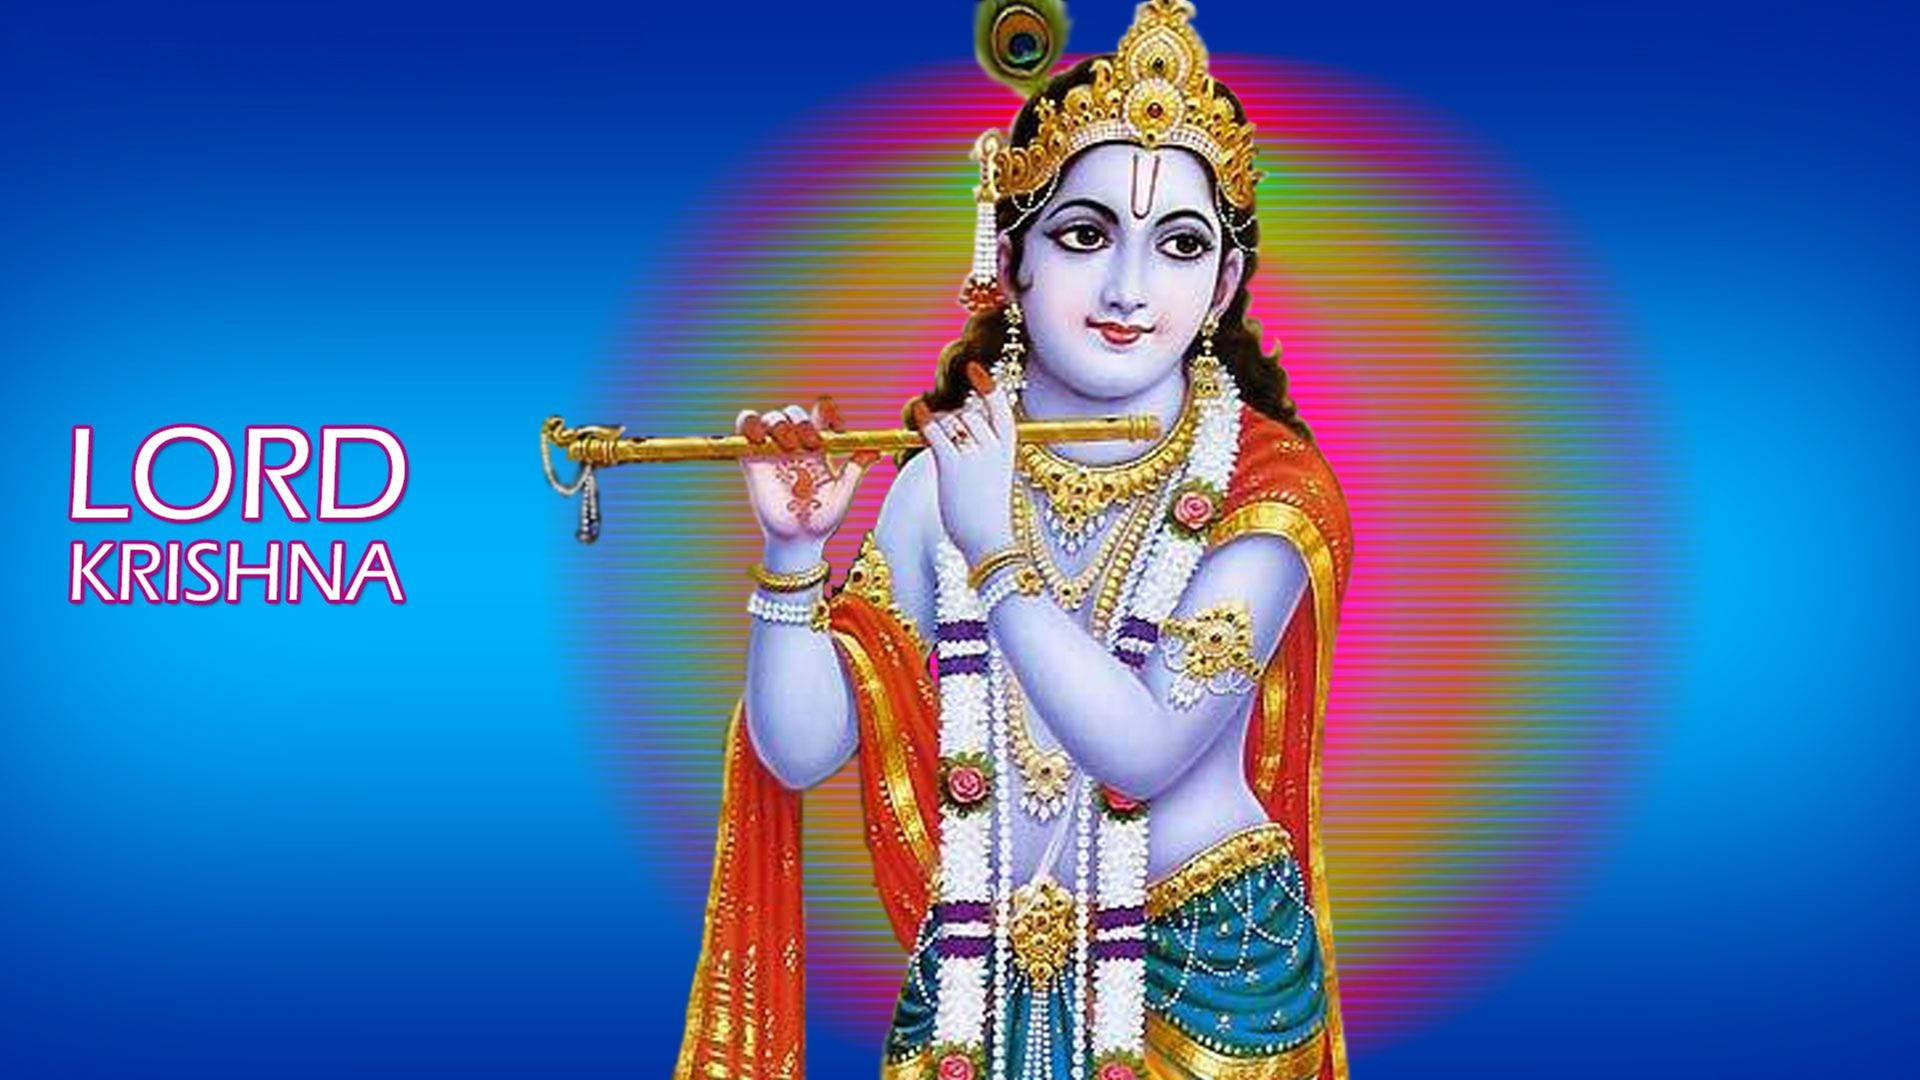 Lord Krishna 4K Psychedelic Digital Art Wallpaper